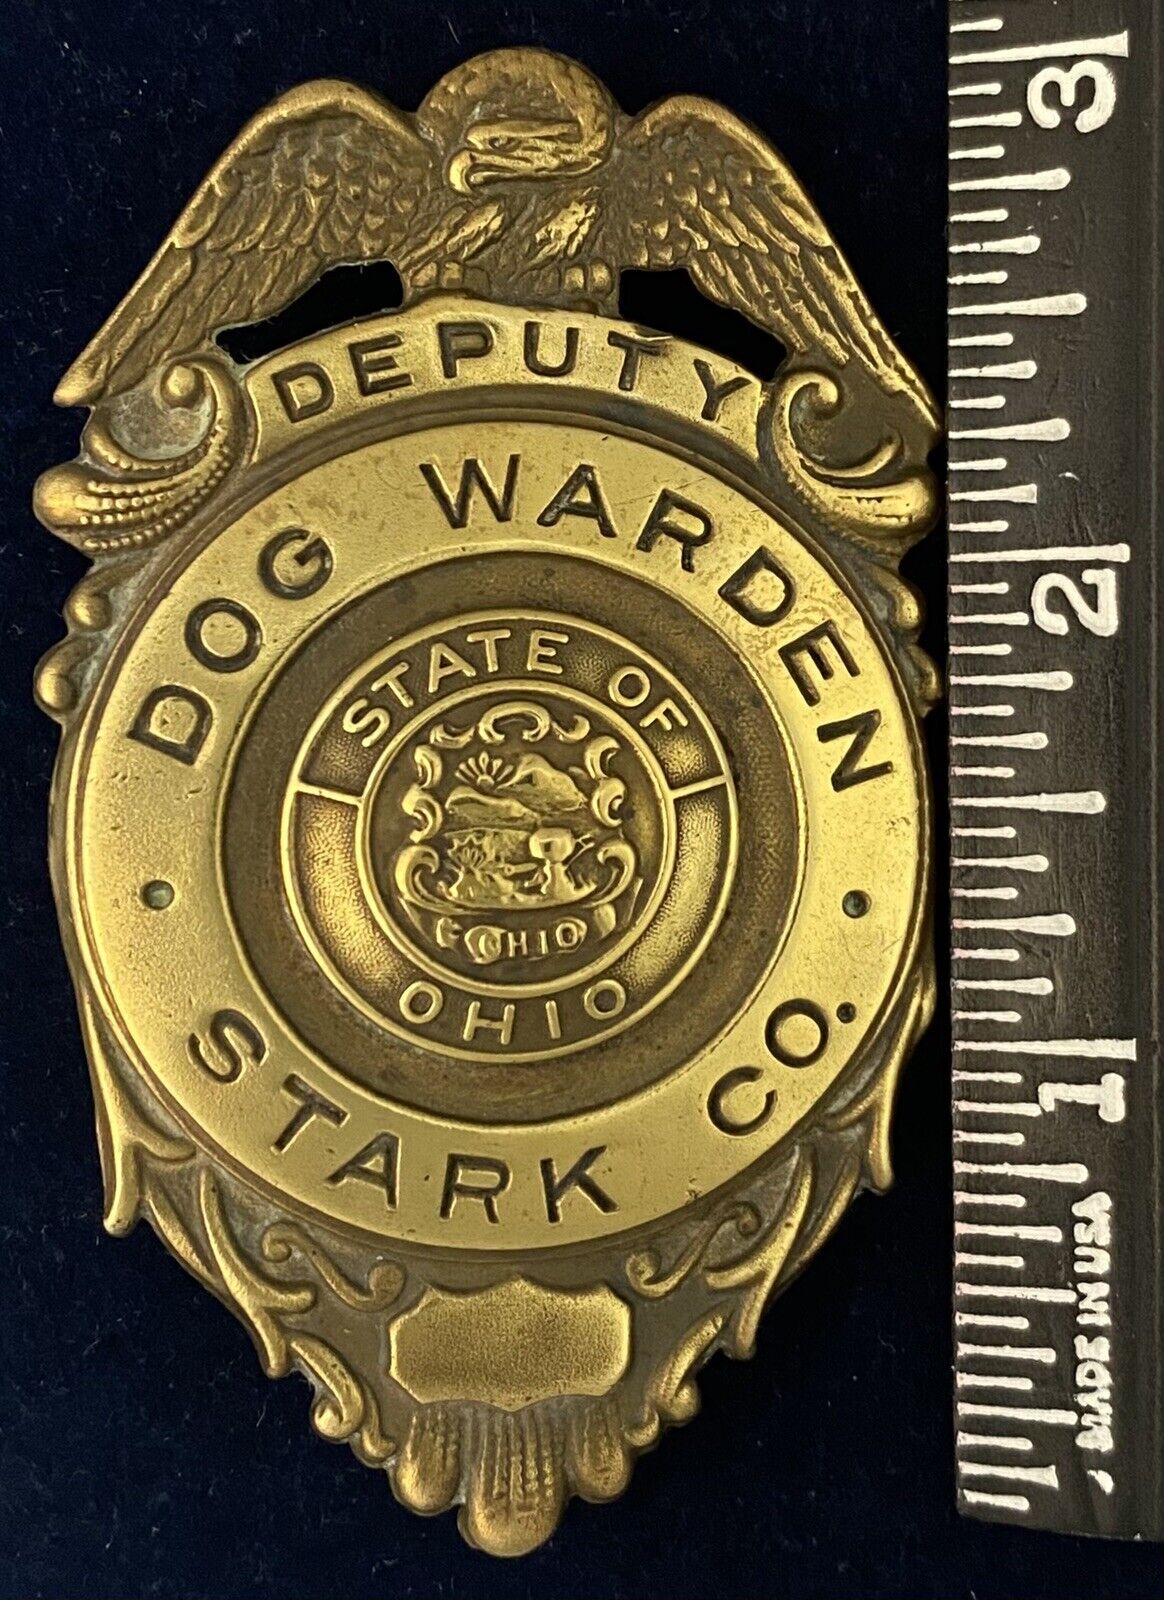 Stark County Ohio Deputy Dog Warden Shield.